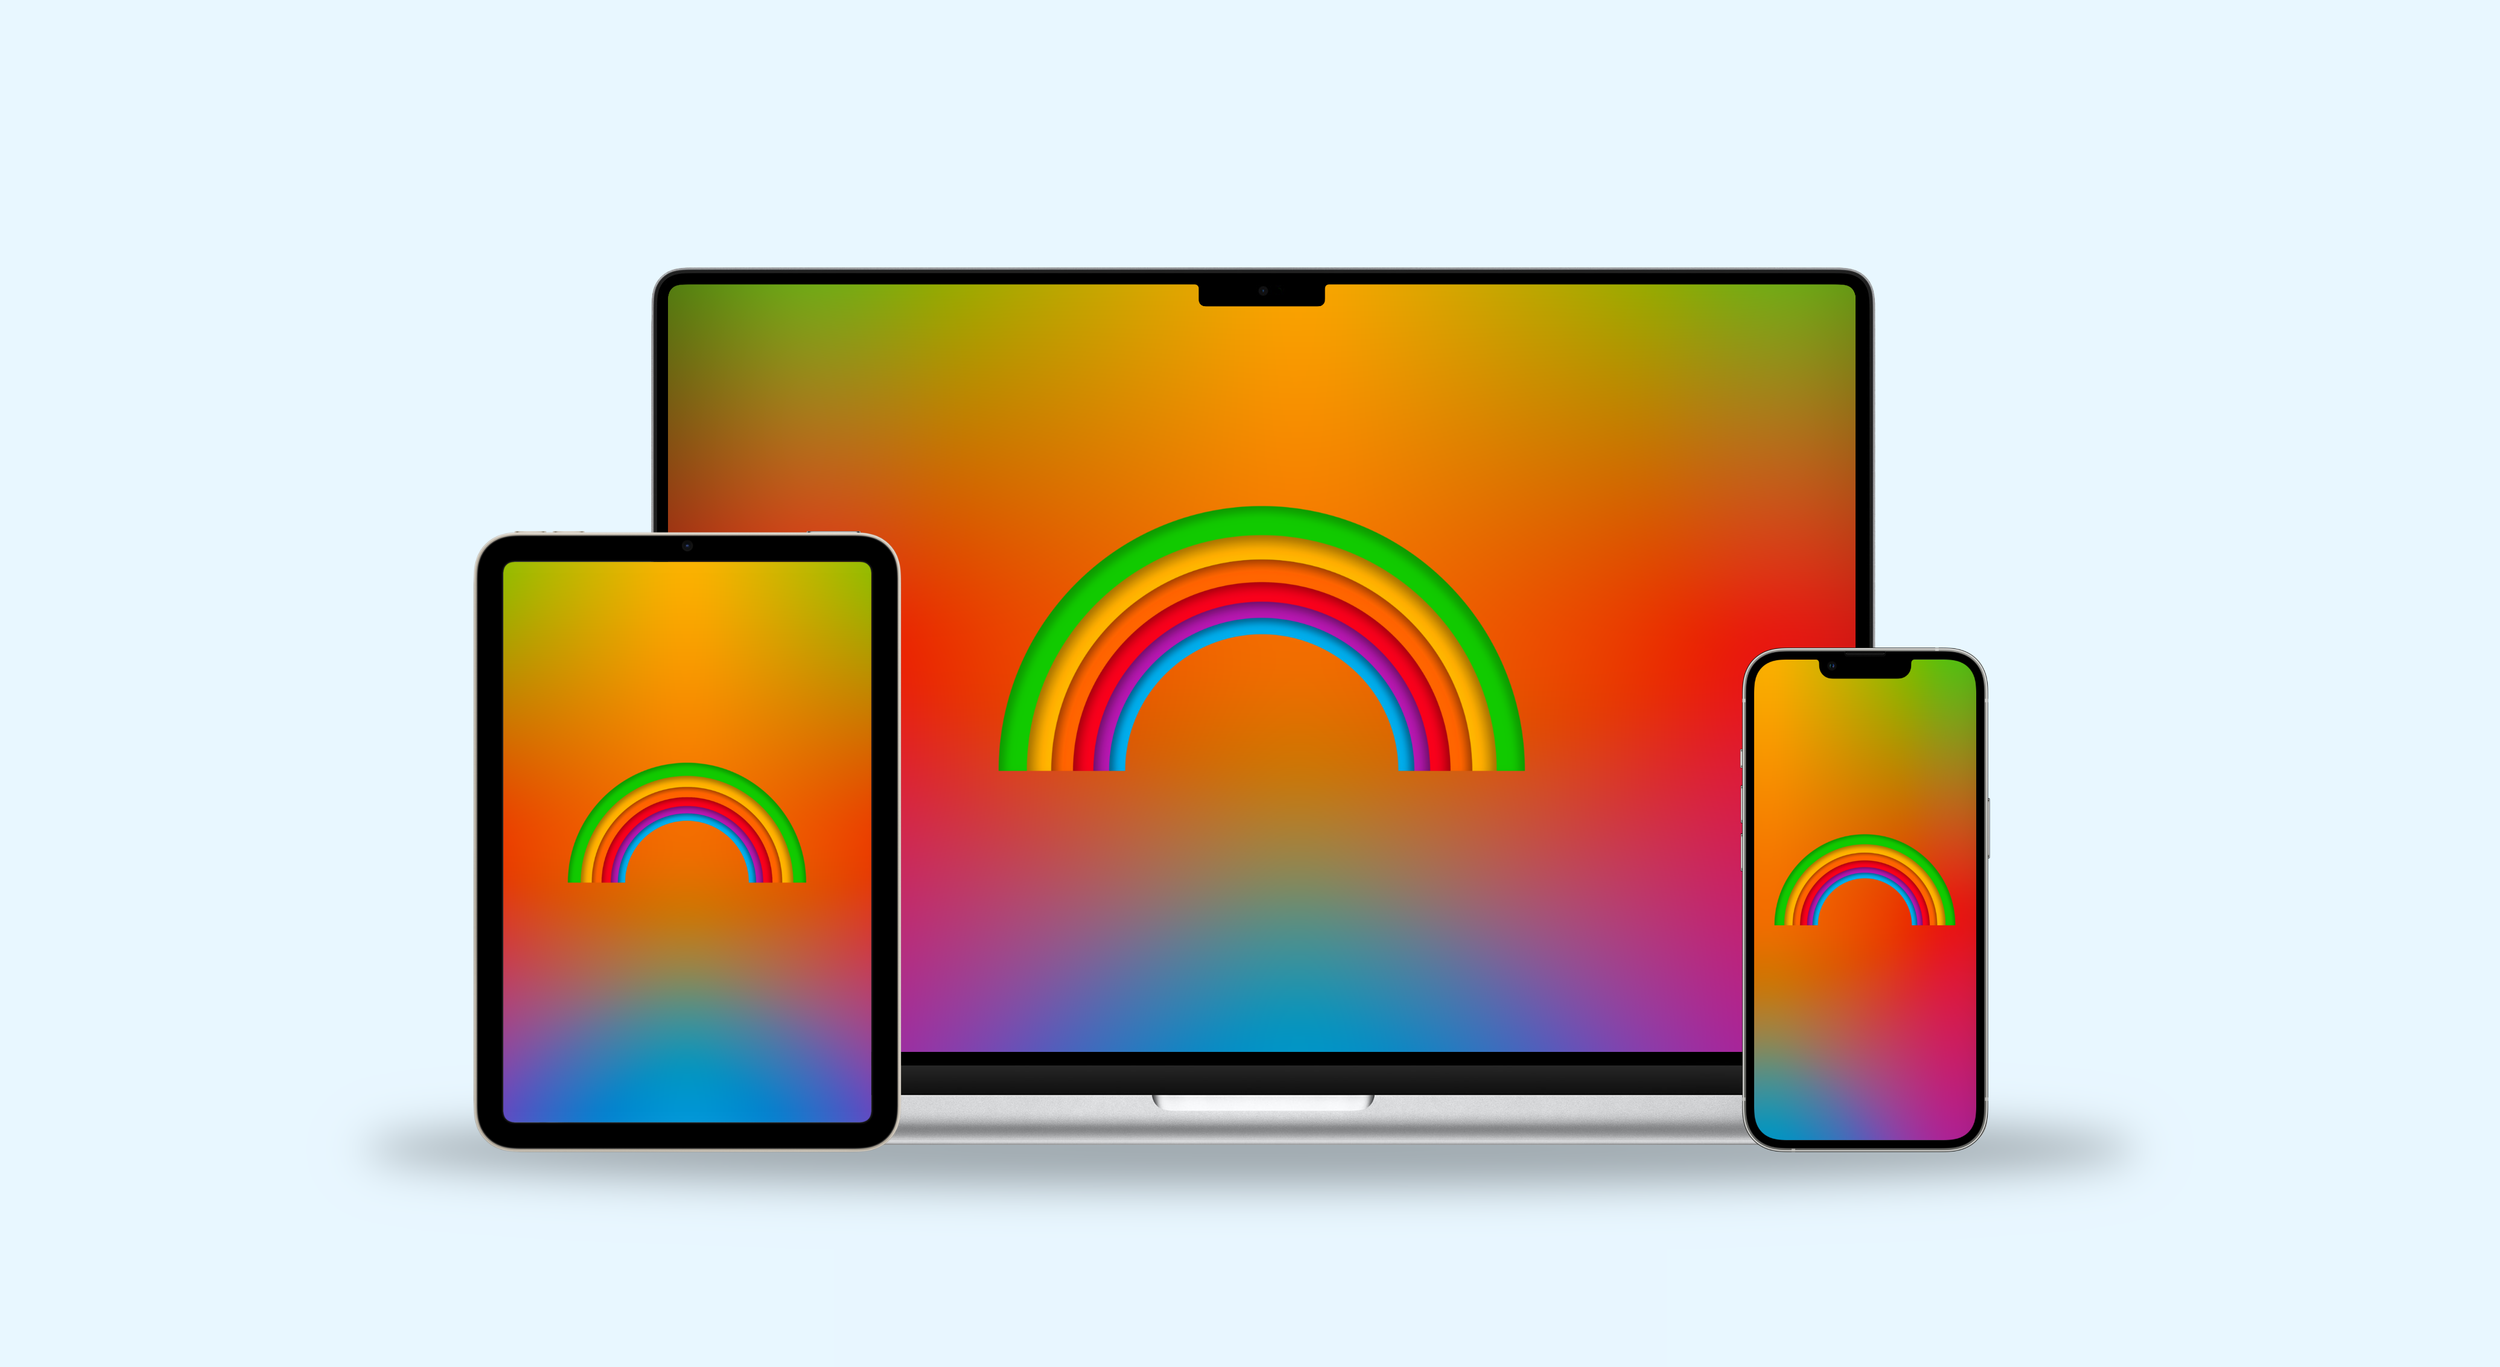 iPhoneXpapers.com | iPhone X wallpaper | so83-blur-gradation-apple-event- rainbow